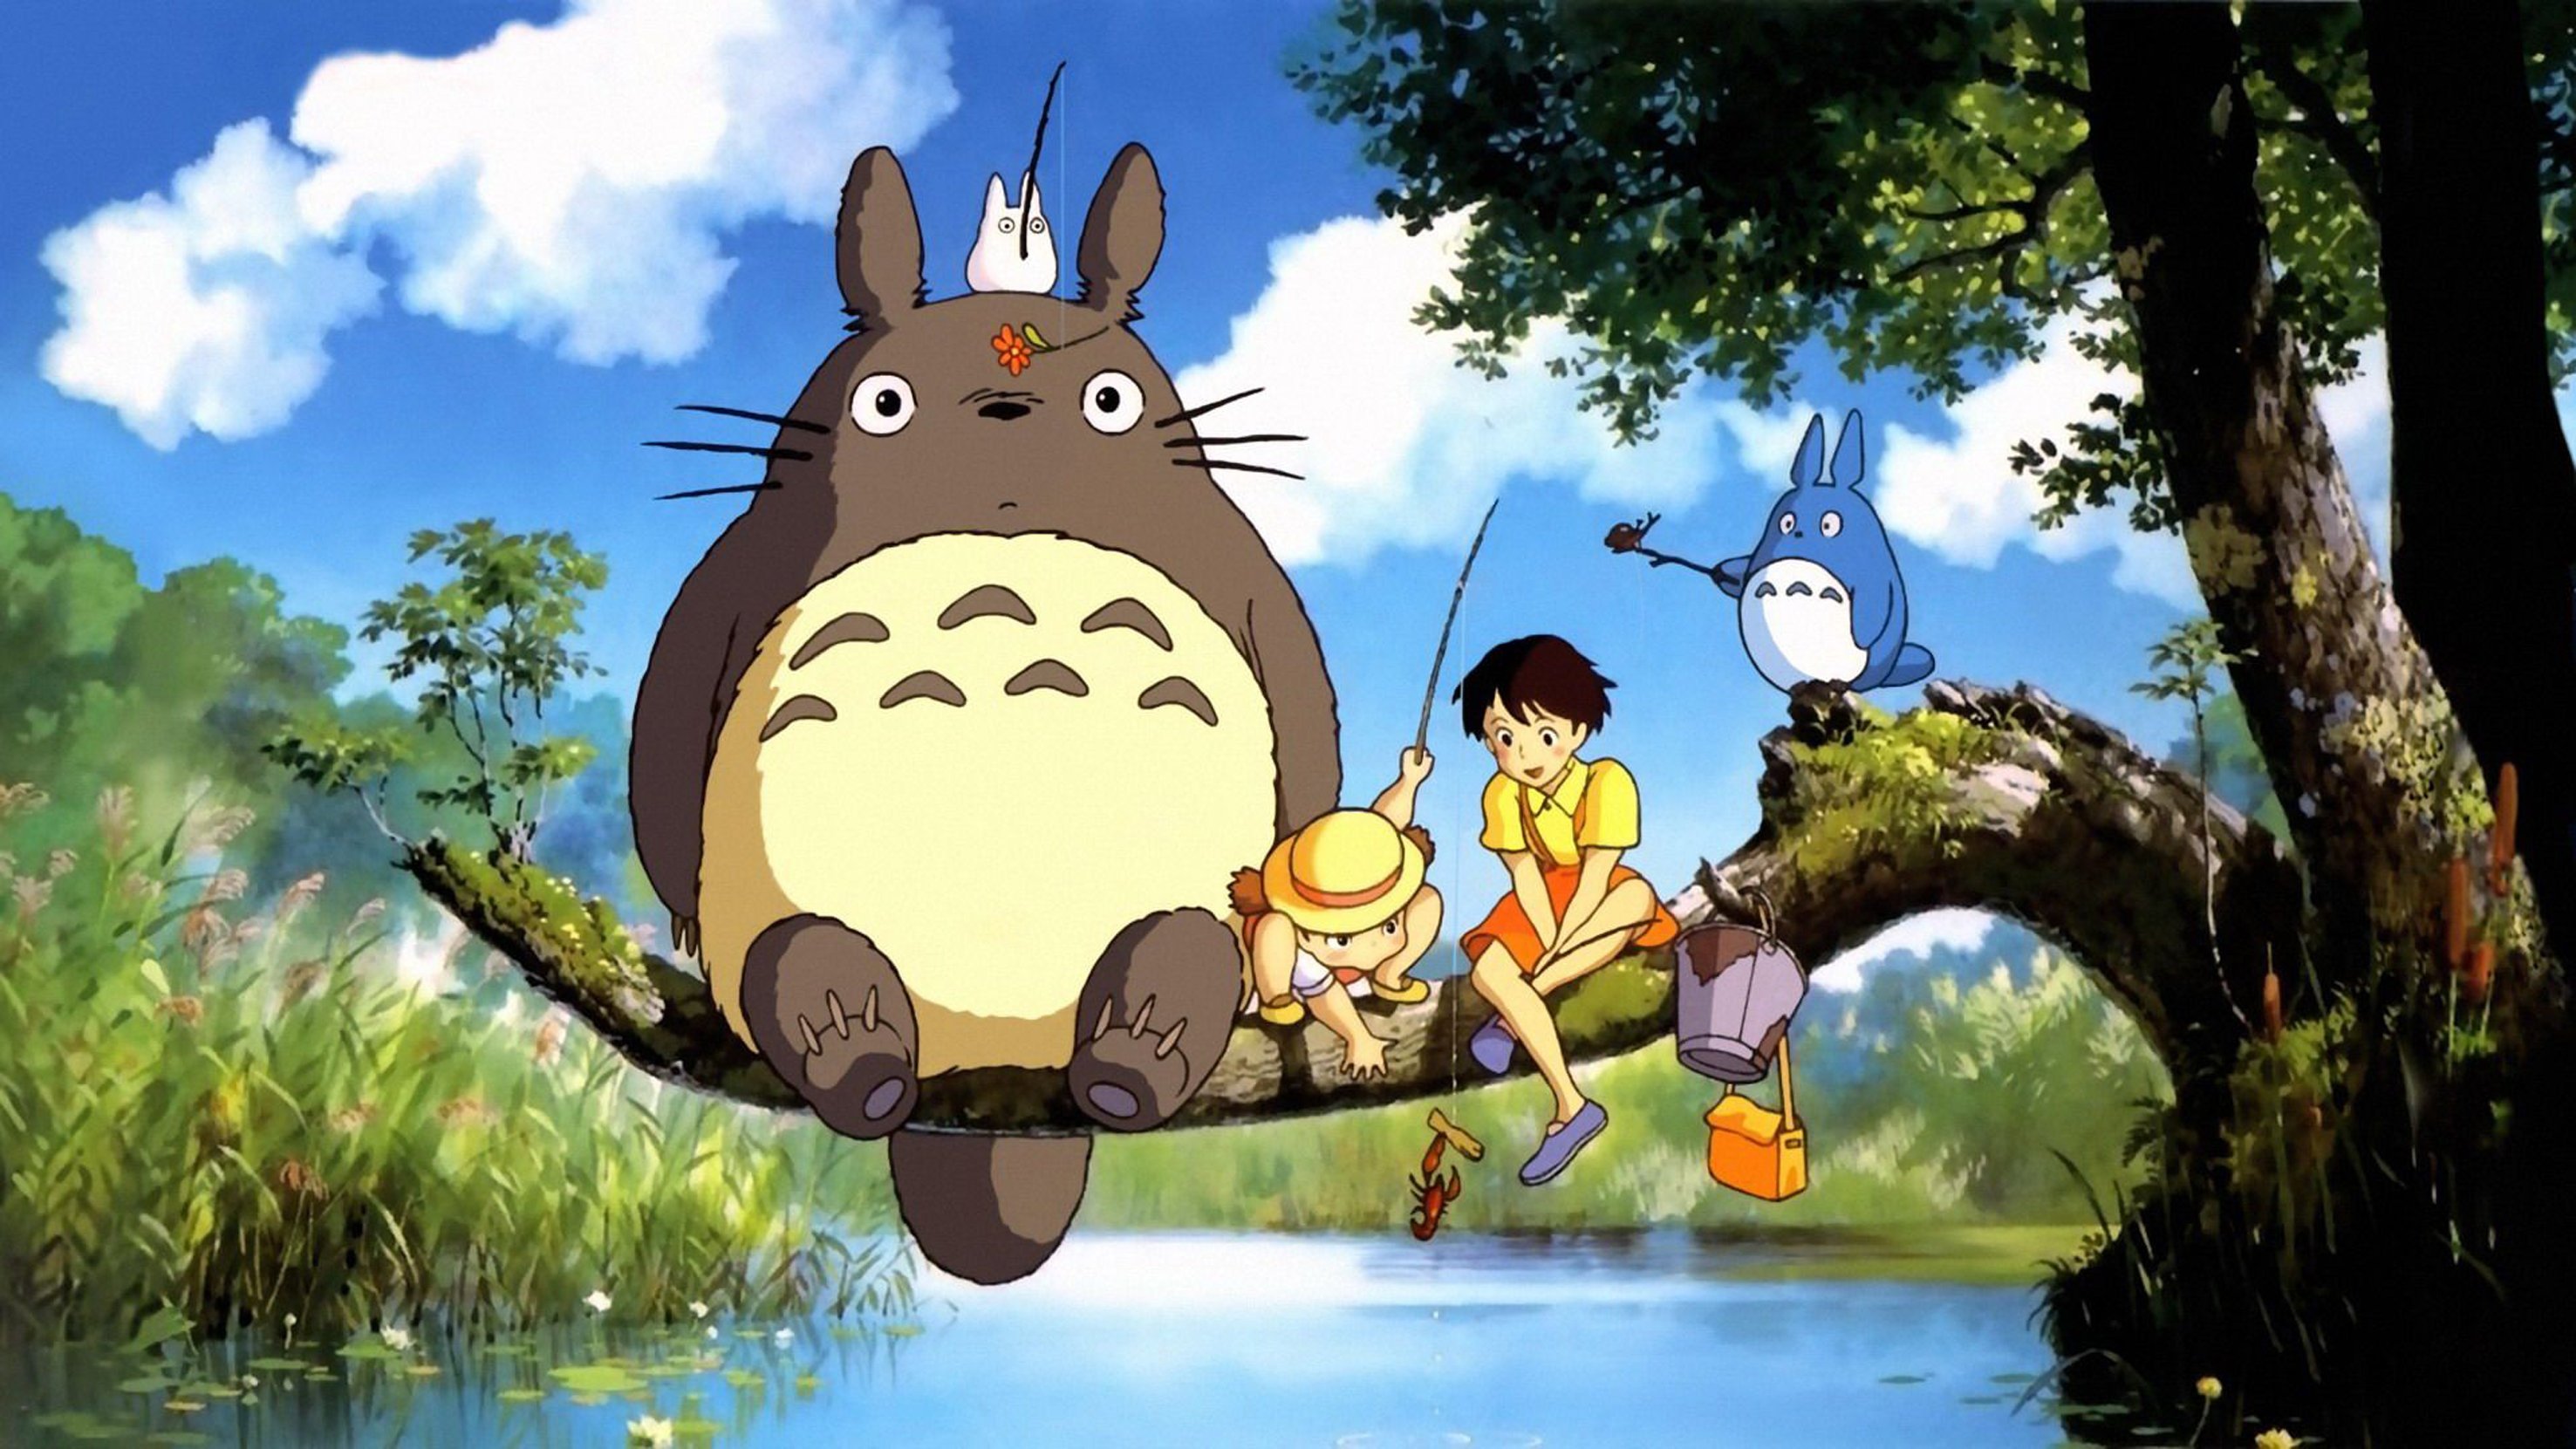 Ghibli Park is screening 'My Neighbor Totoro' sequel this November